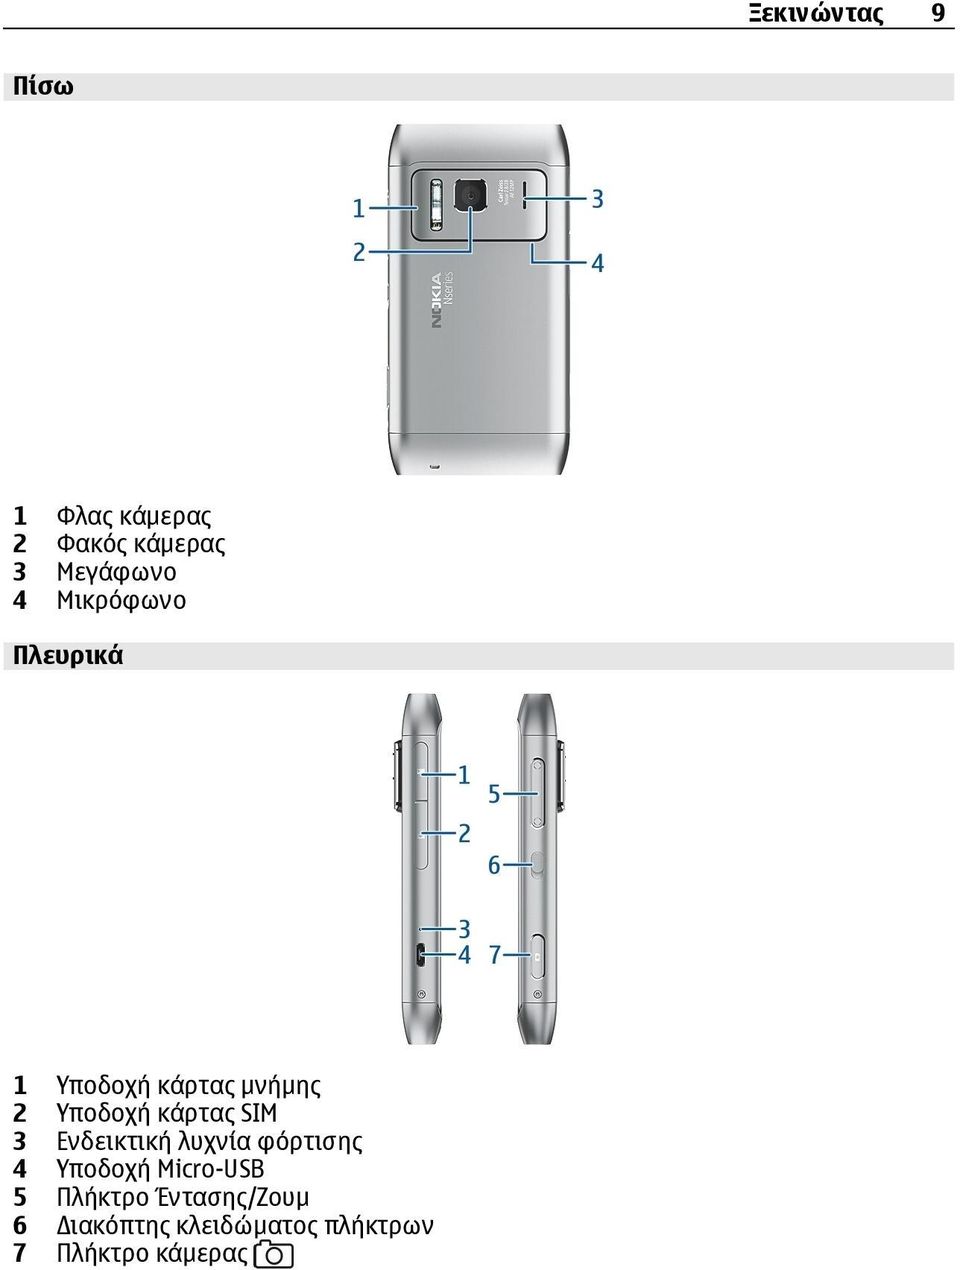 SIM 3 Ενδεικτική λυχνία φόρτισης 4 Υποδοχή Micro-USB 5